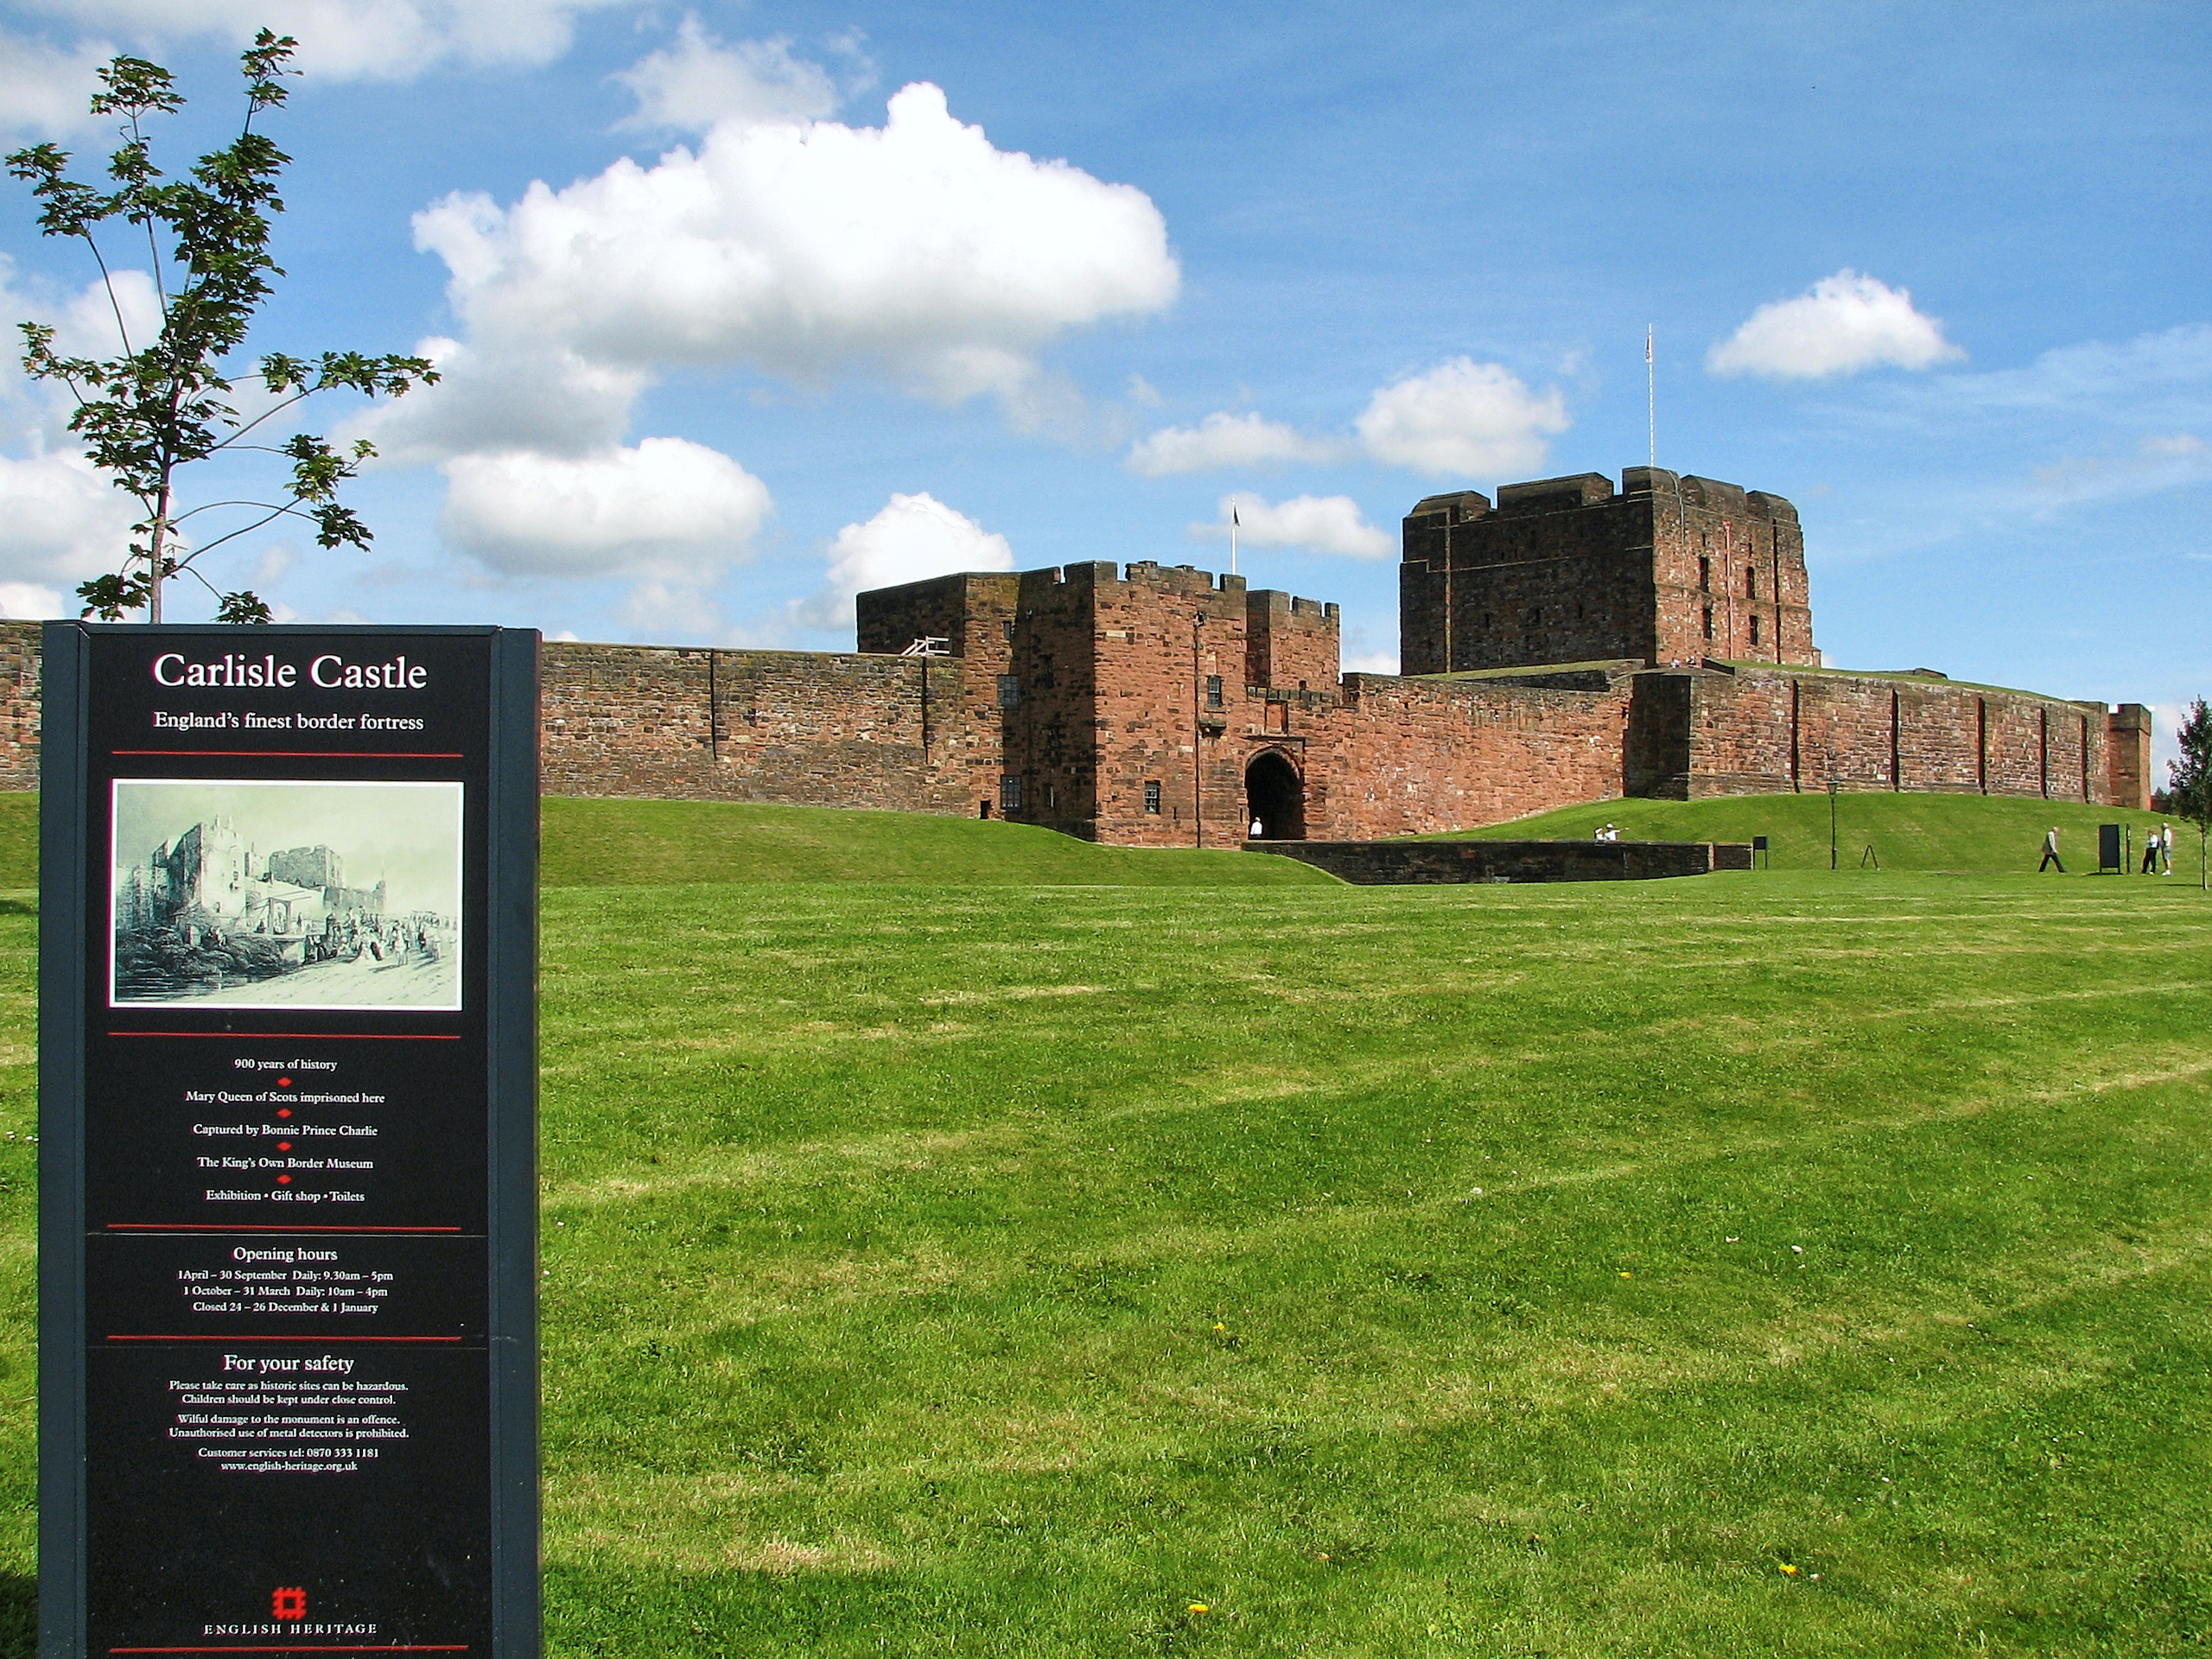 03701_07.08.09_Keswick_CARLISLE_HADRIANS WALL Tour_Carlisle Castle.jpg